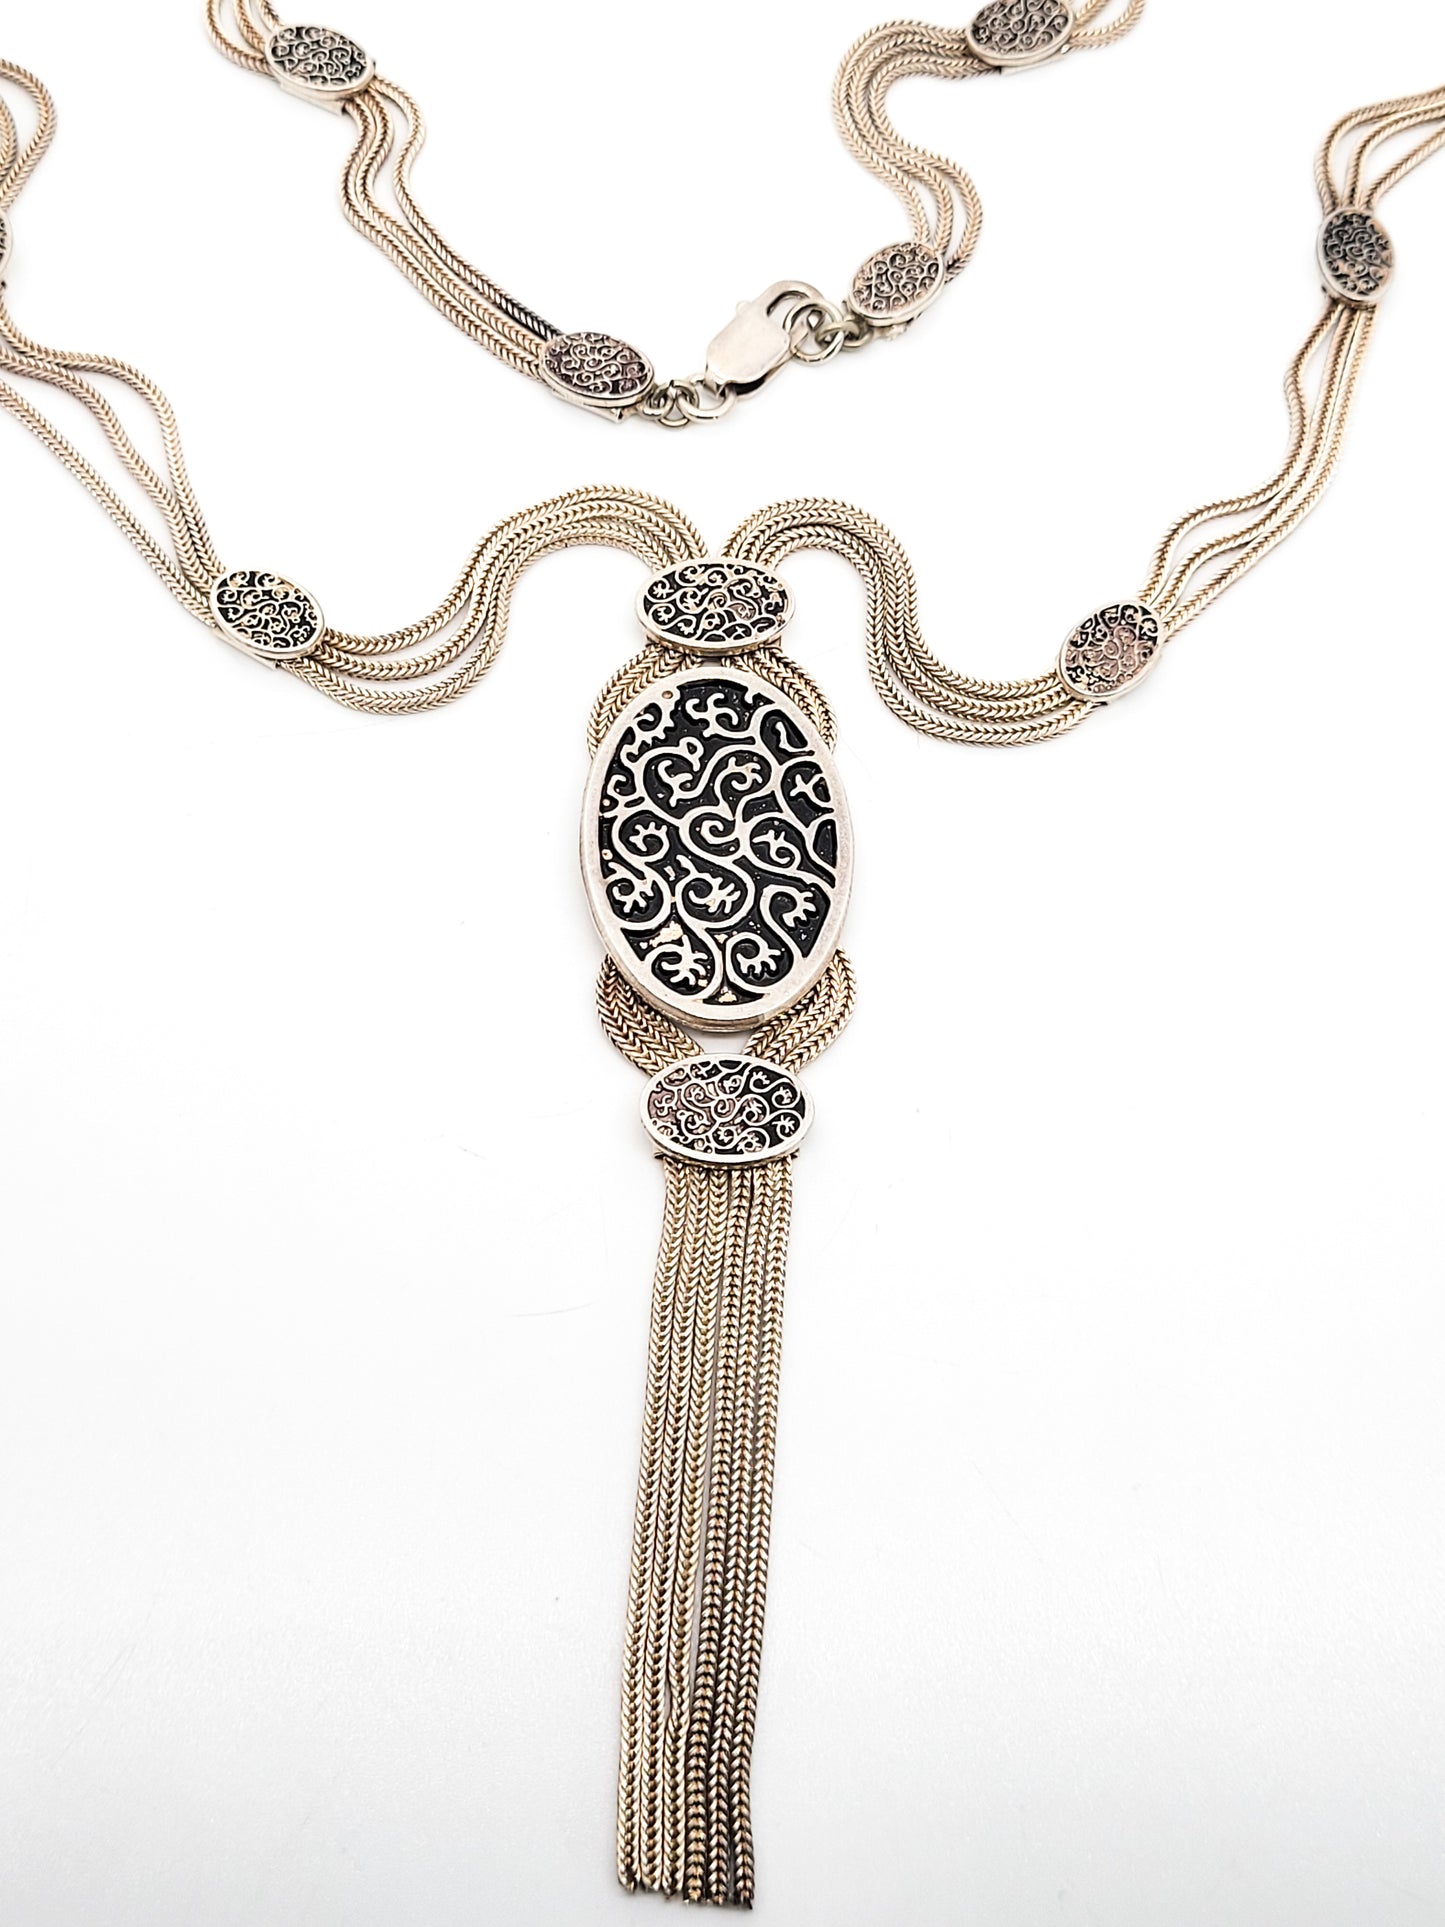 Russian 84 NU sterling silver black enamel panel vintage necklace